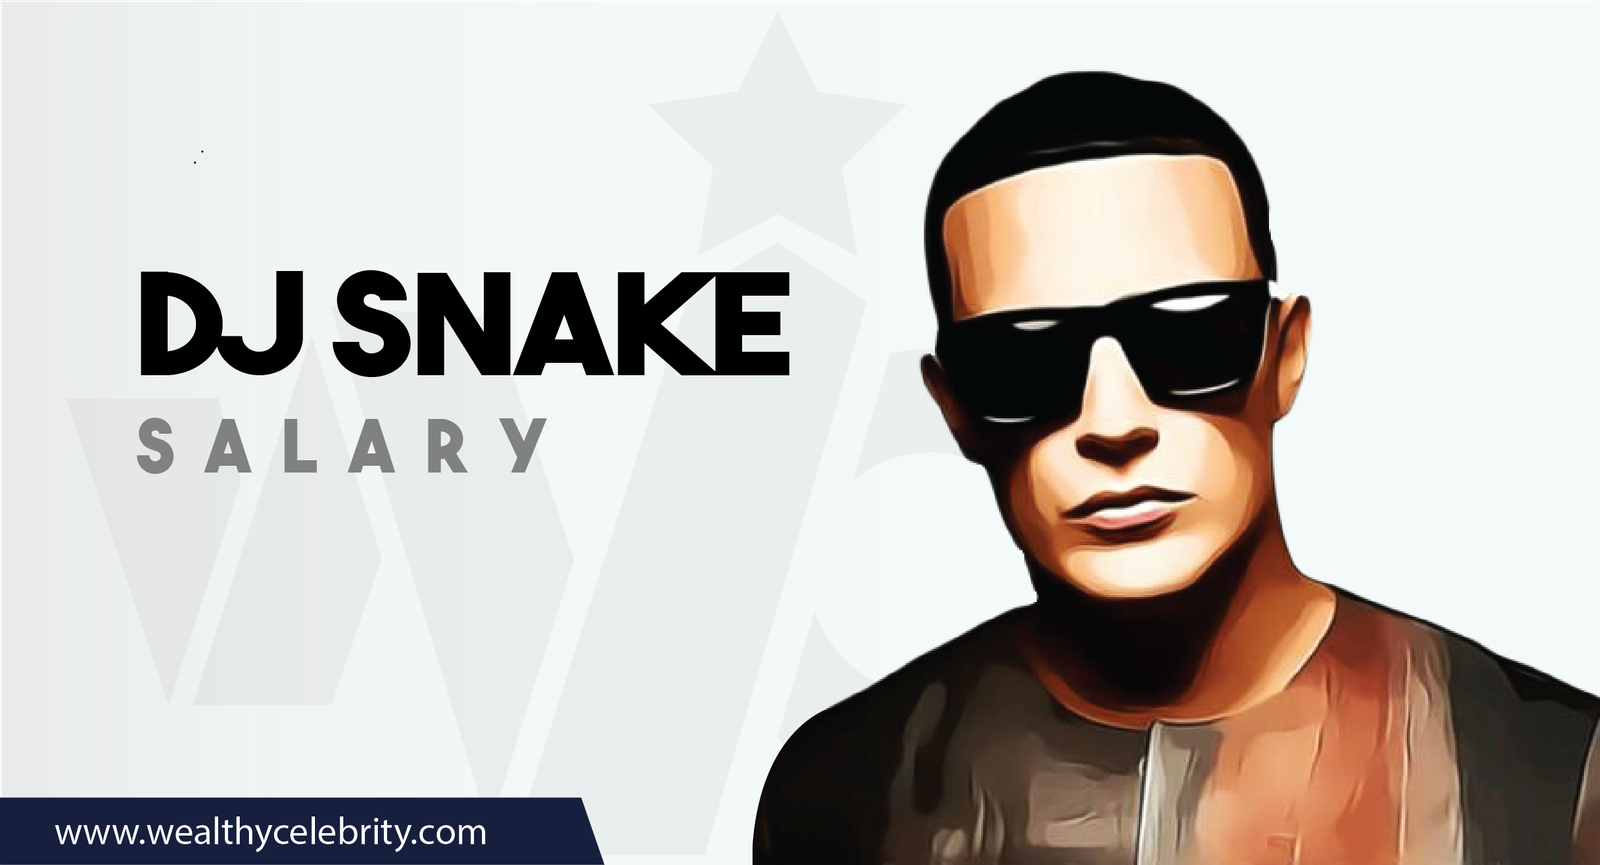 DJ Snake DJ - Current Salary Net Worth